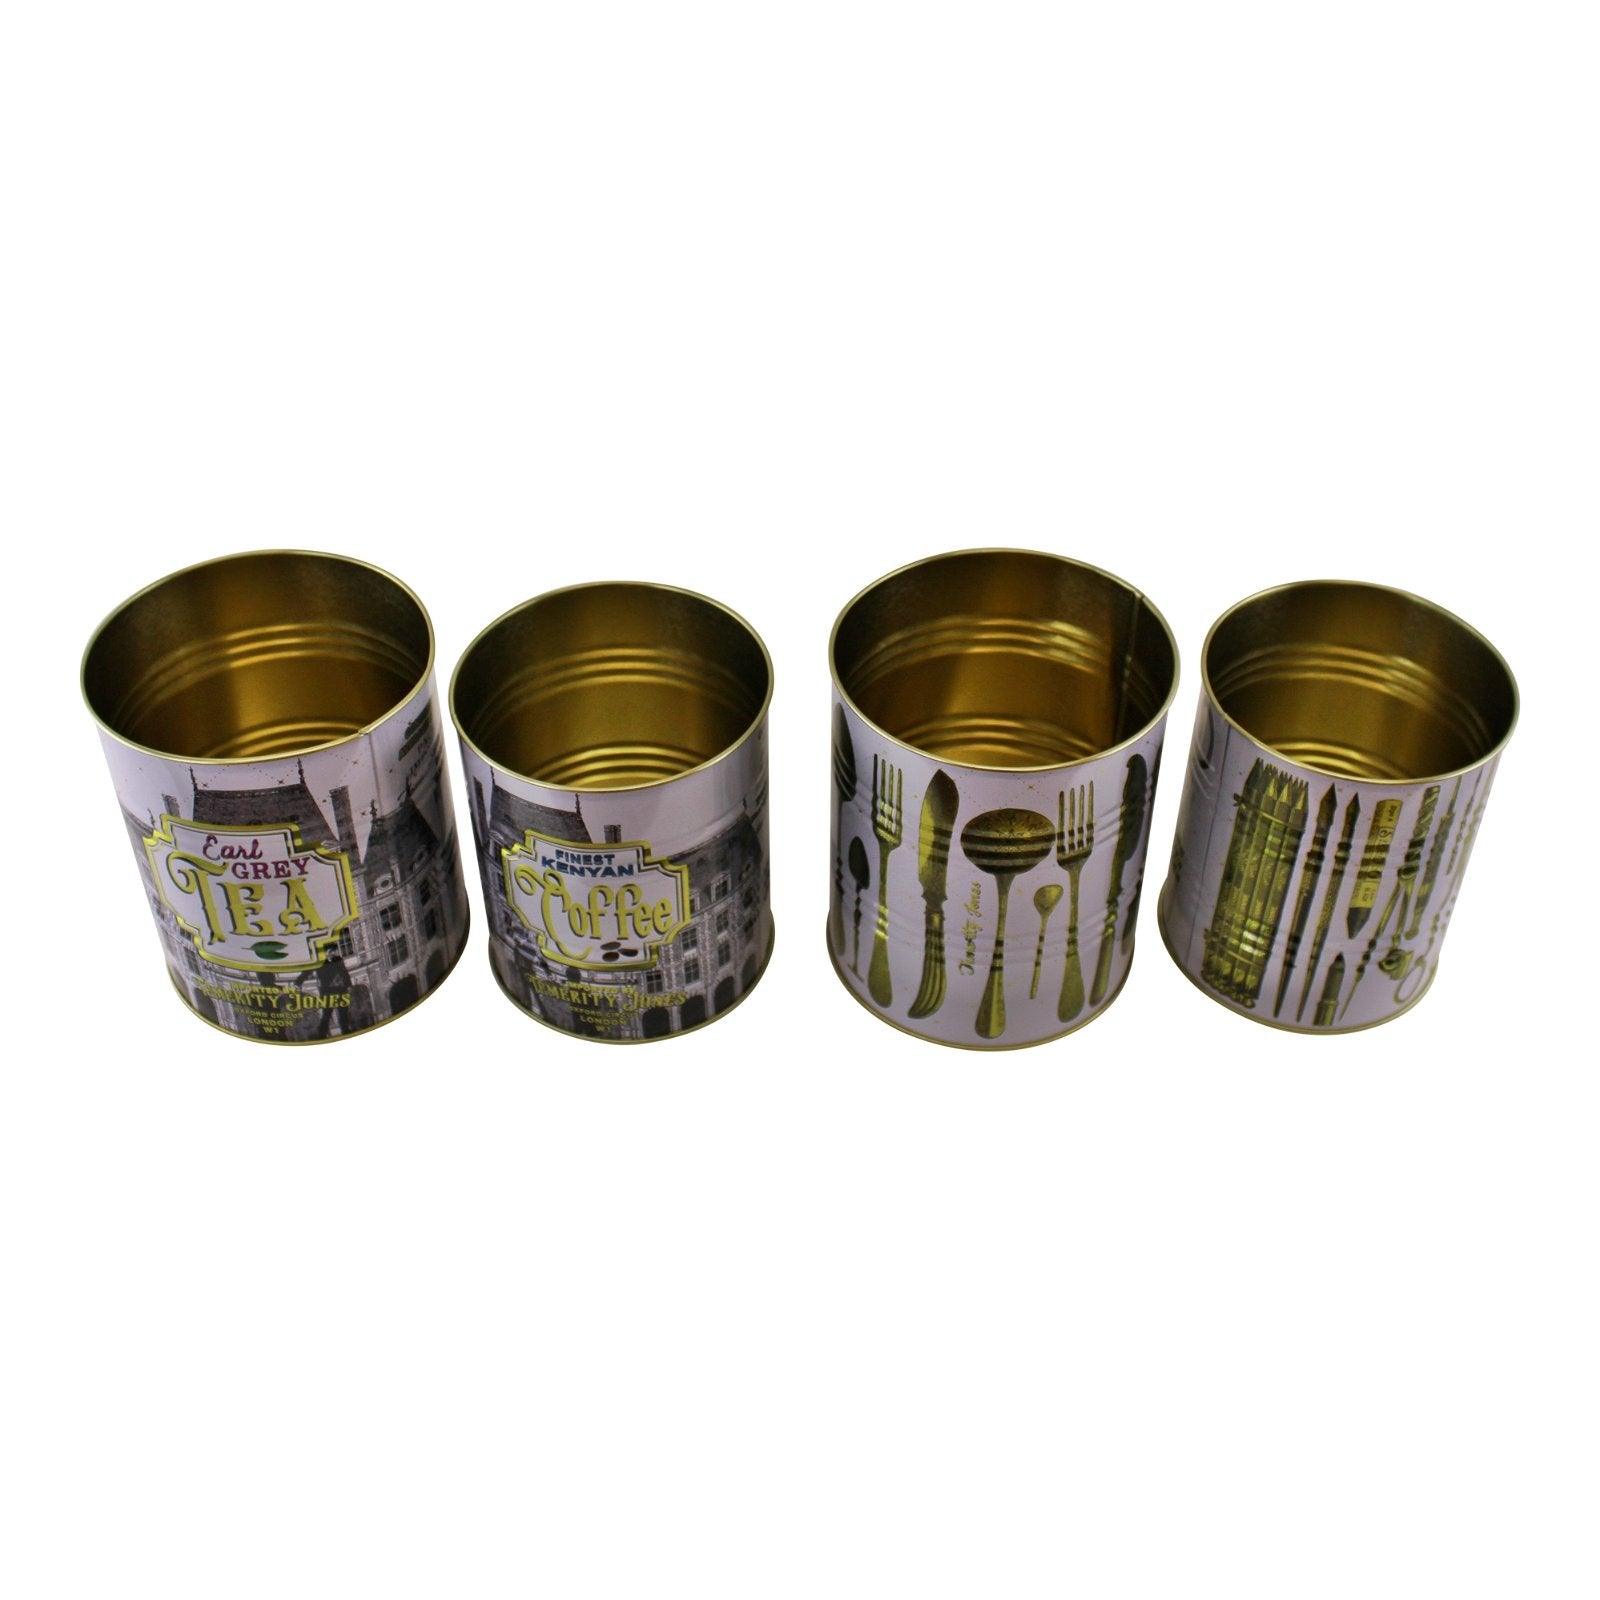 View Set of 4 Vintage Style Storage Tins information